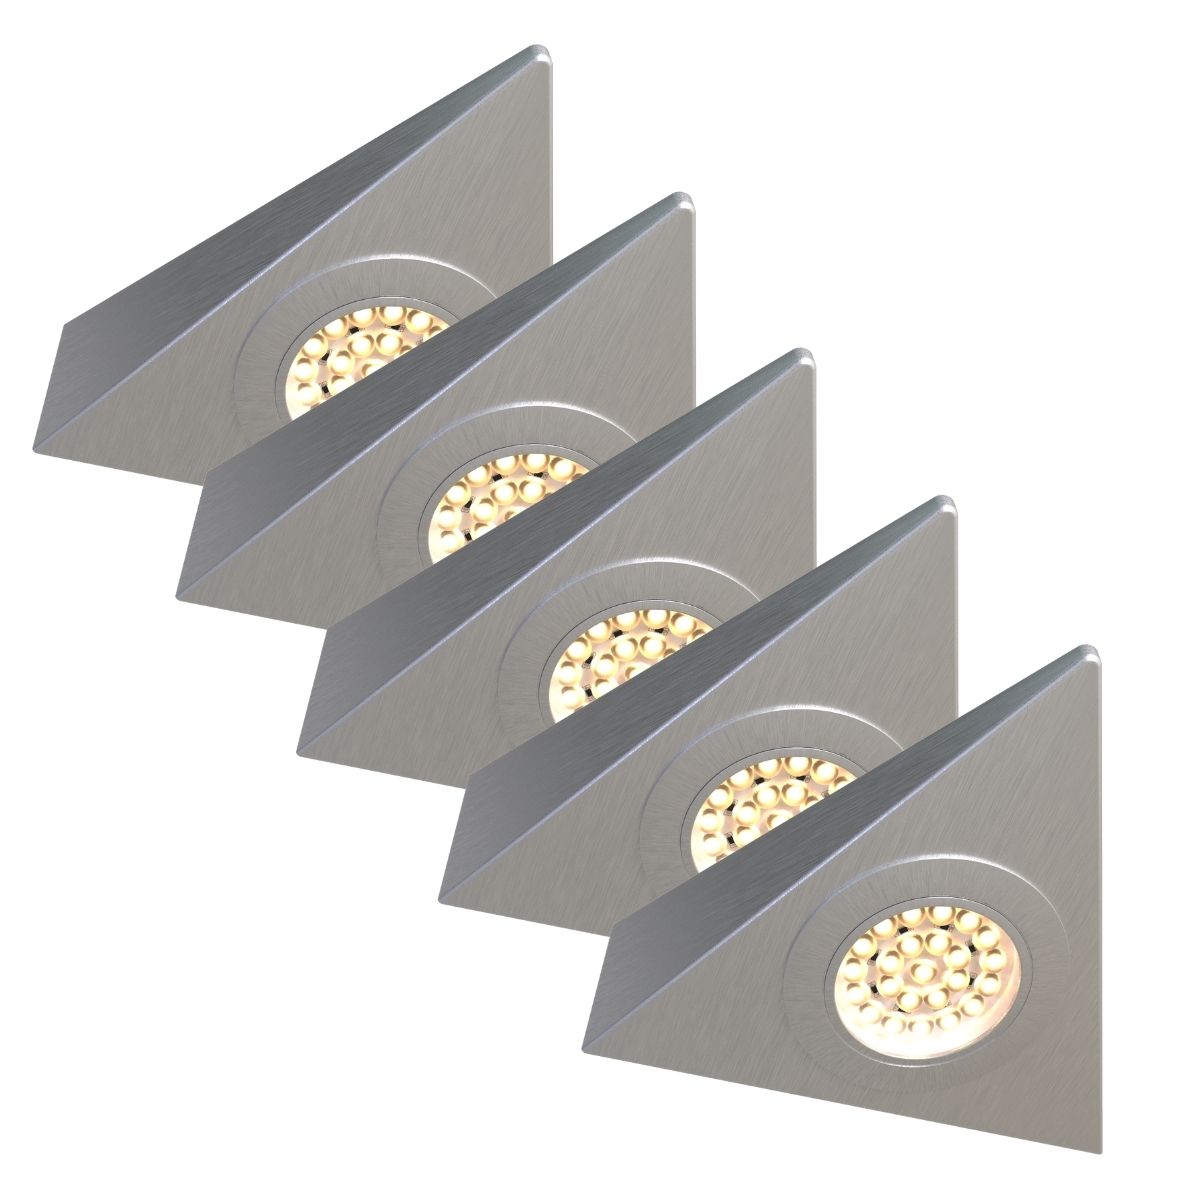 View Pack of 5 Triangle LED Under Cabinet or Shelf Lights Including Transformer information